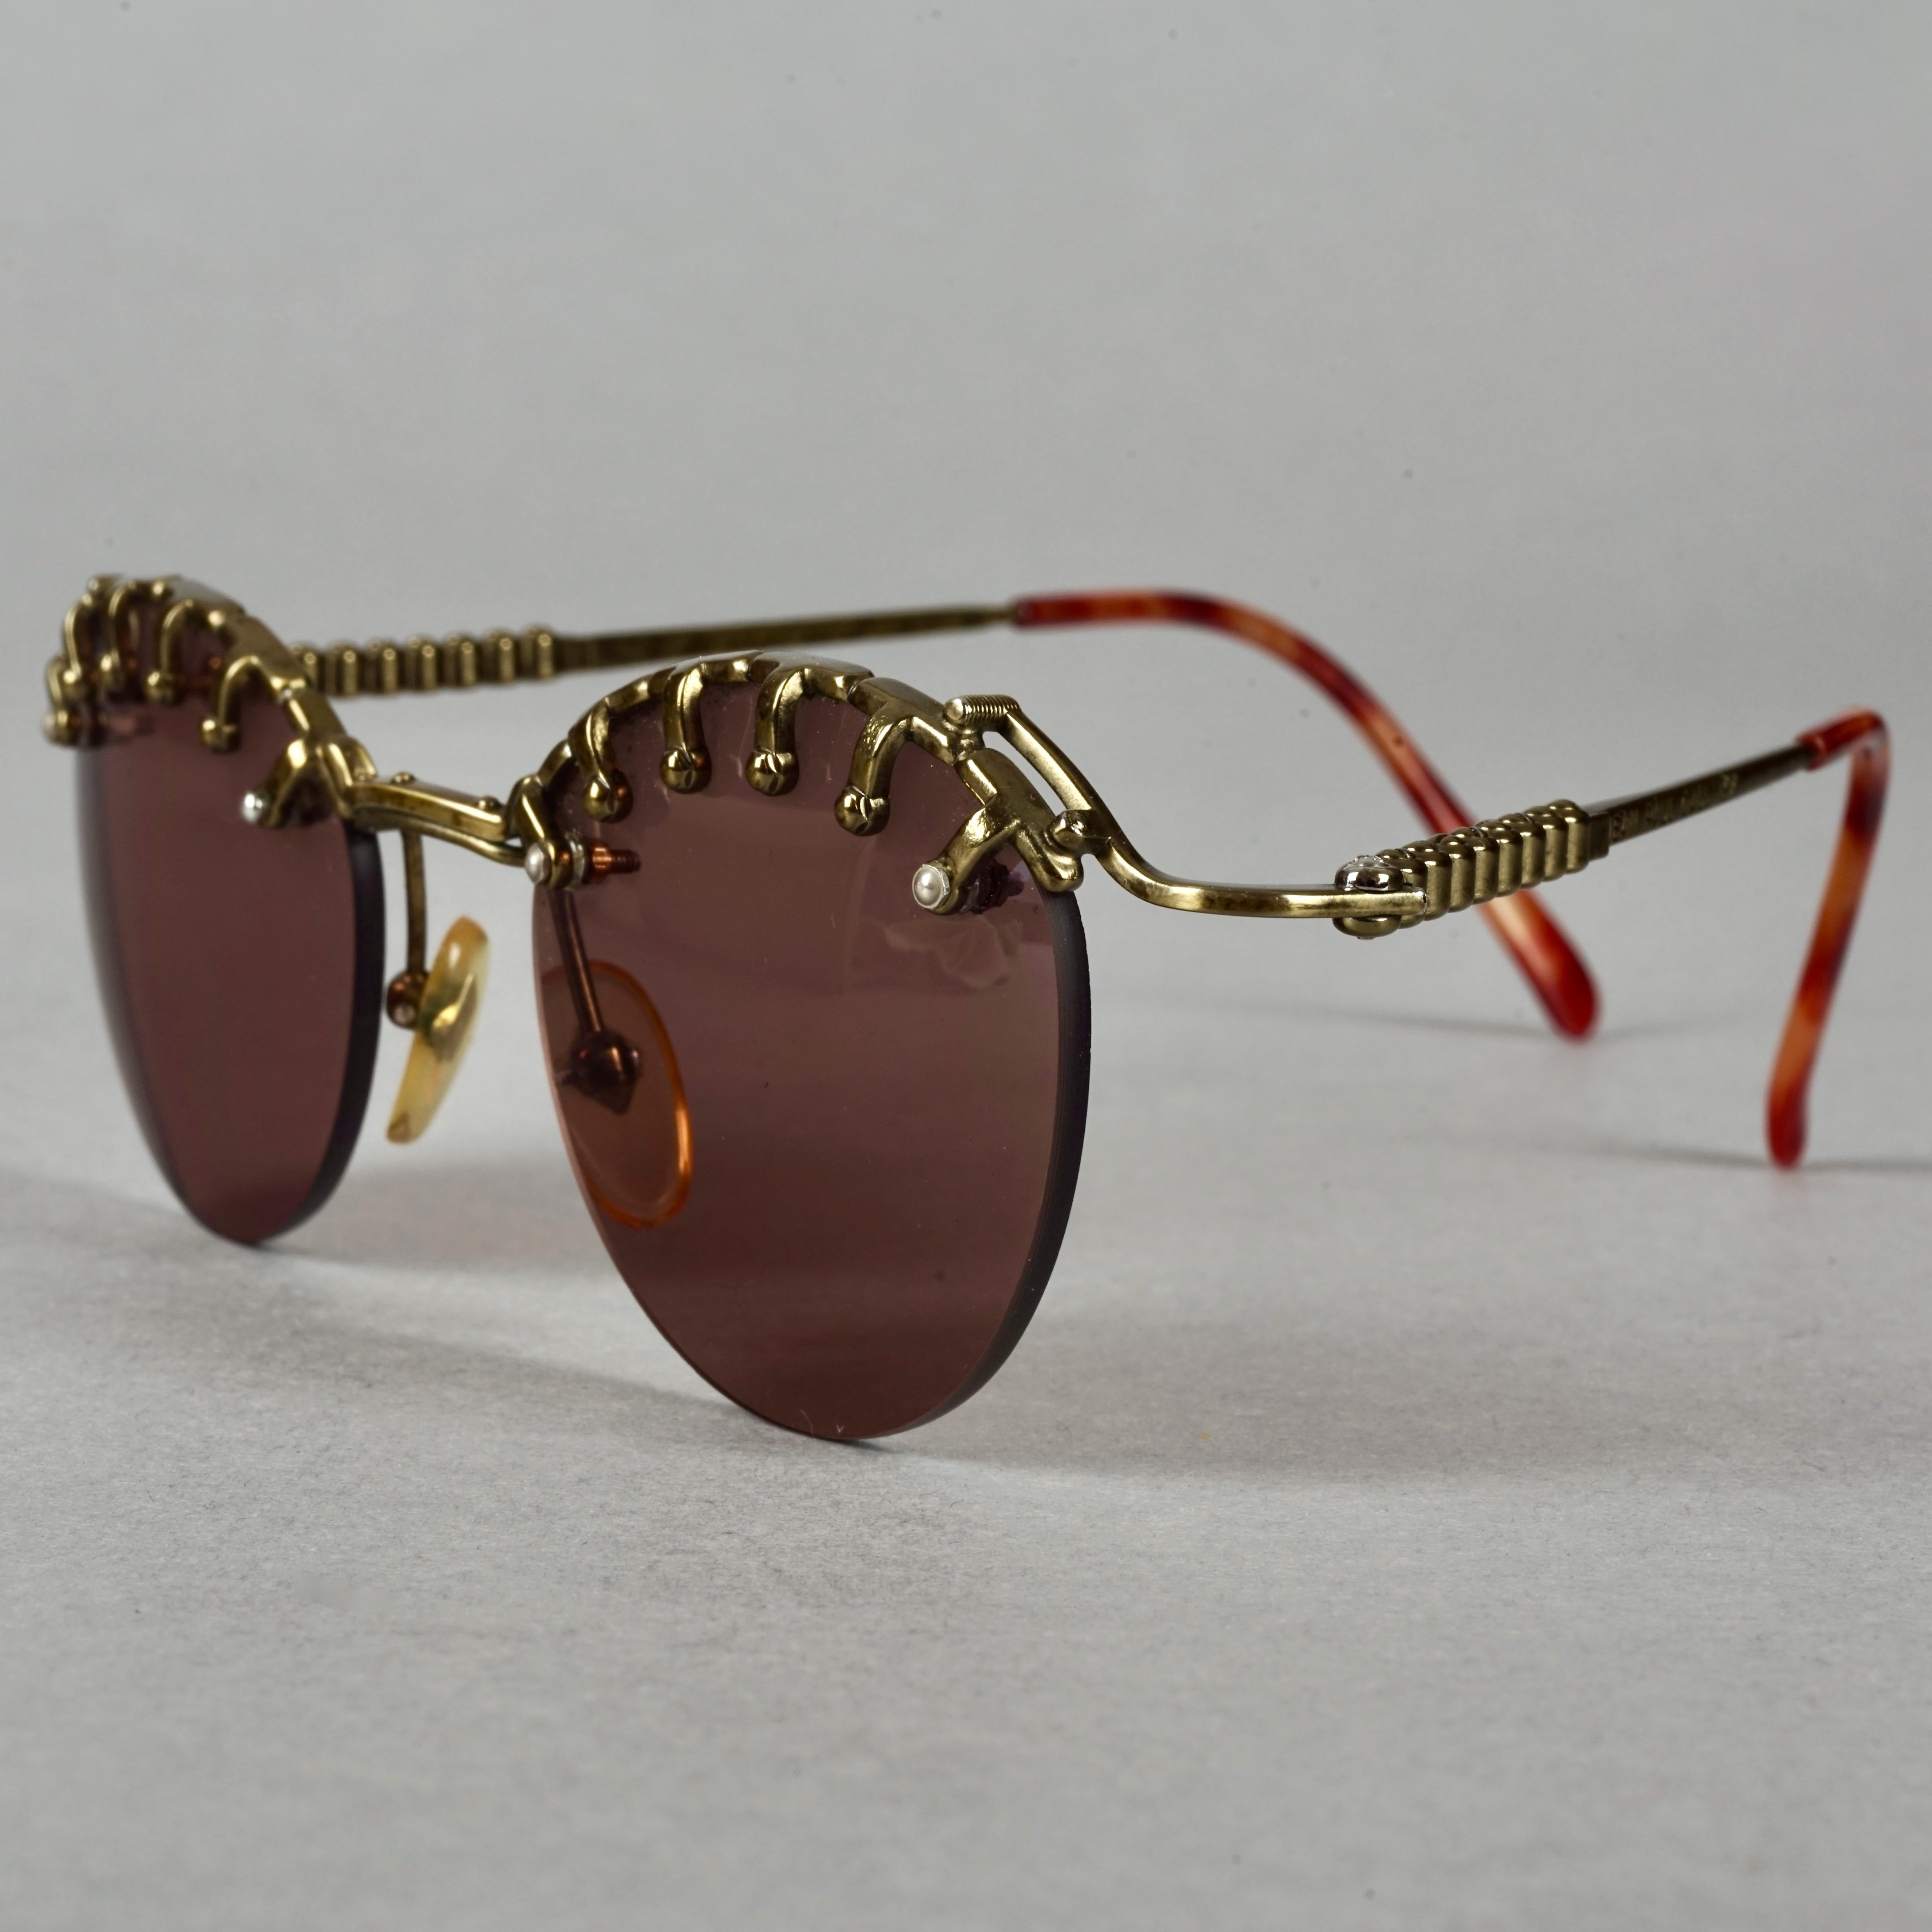 jean paul gaultier glasses vintage